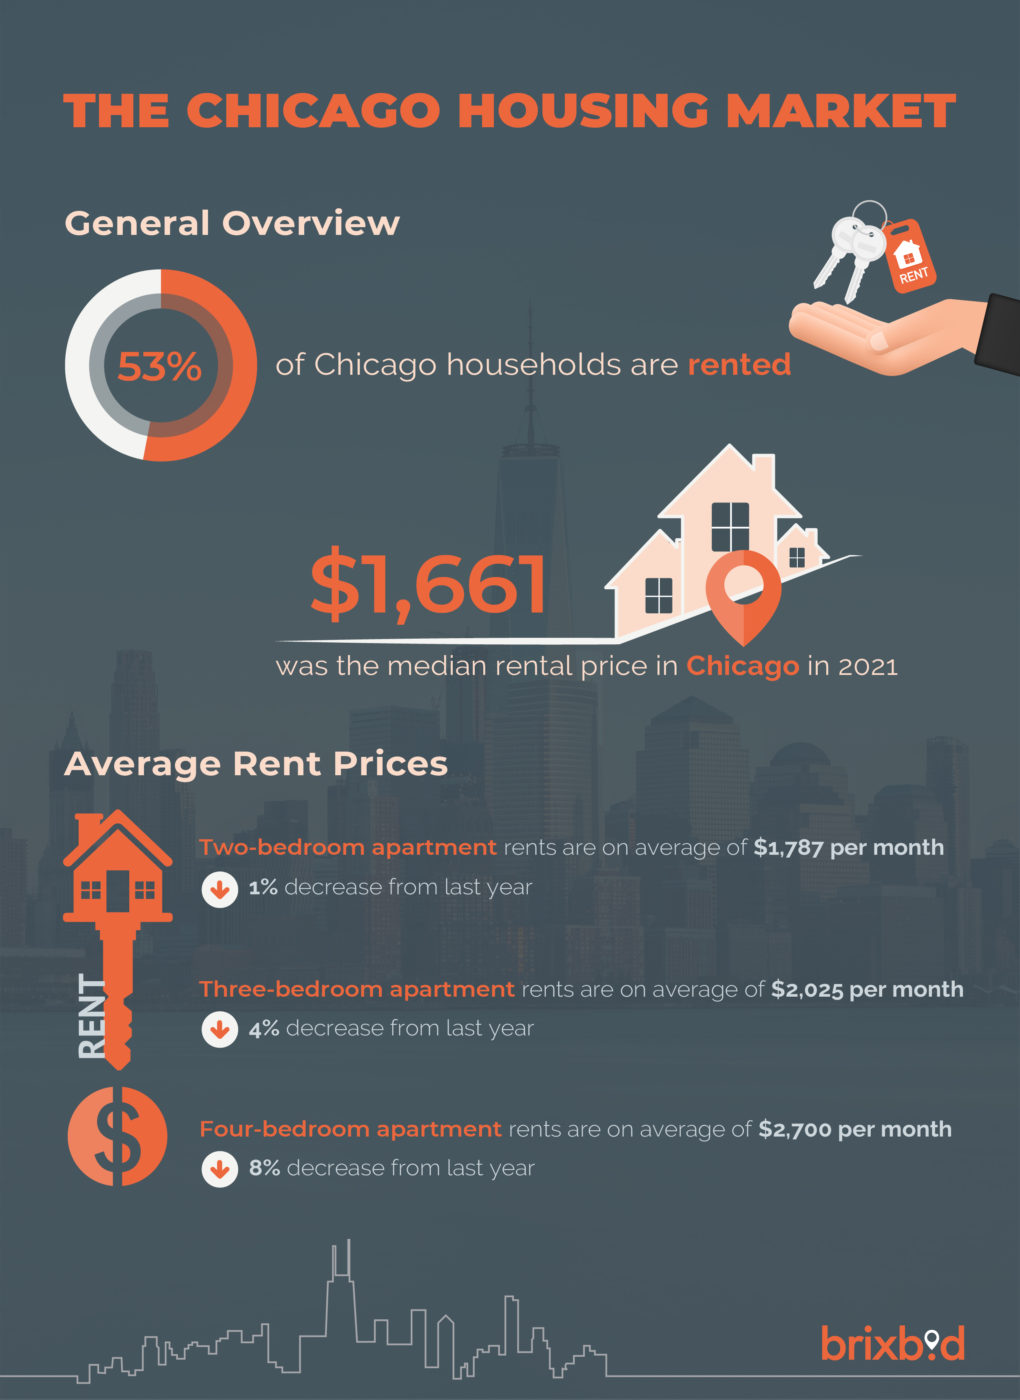 Chicago housing market statistics infographic 2022